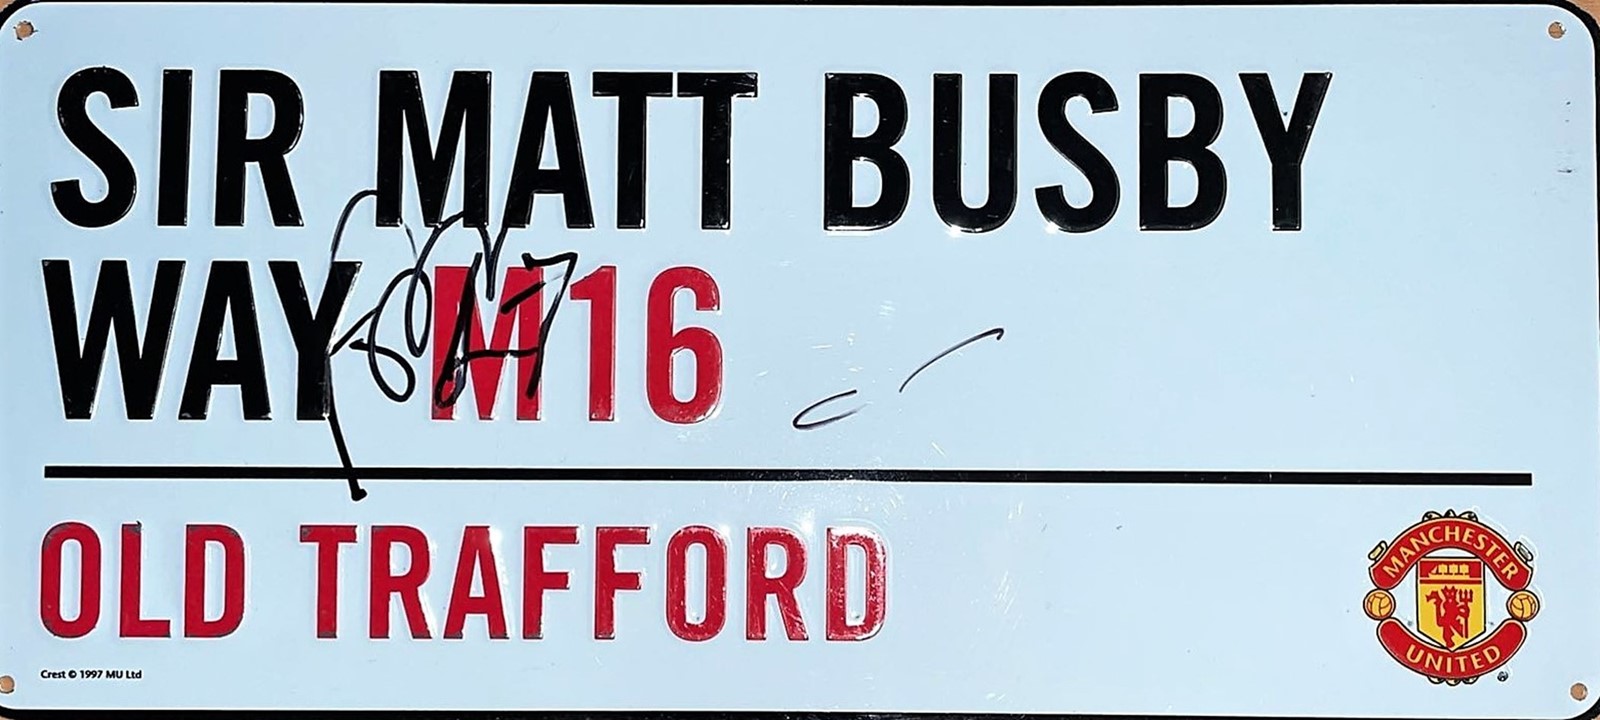 Football Marouane Fellaini signed Manchester United Sir Matt Busby Way M16 Old Trafford road sign.